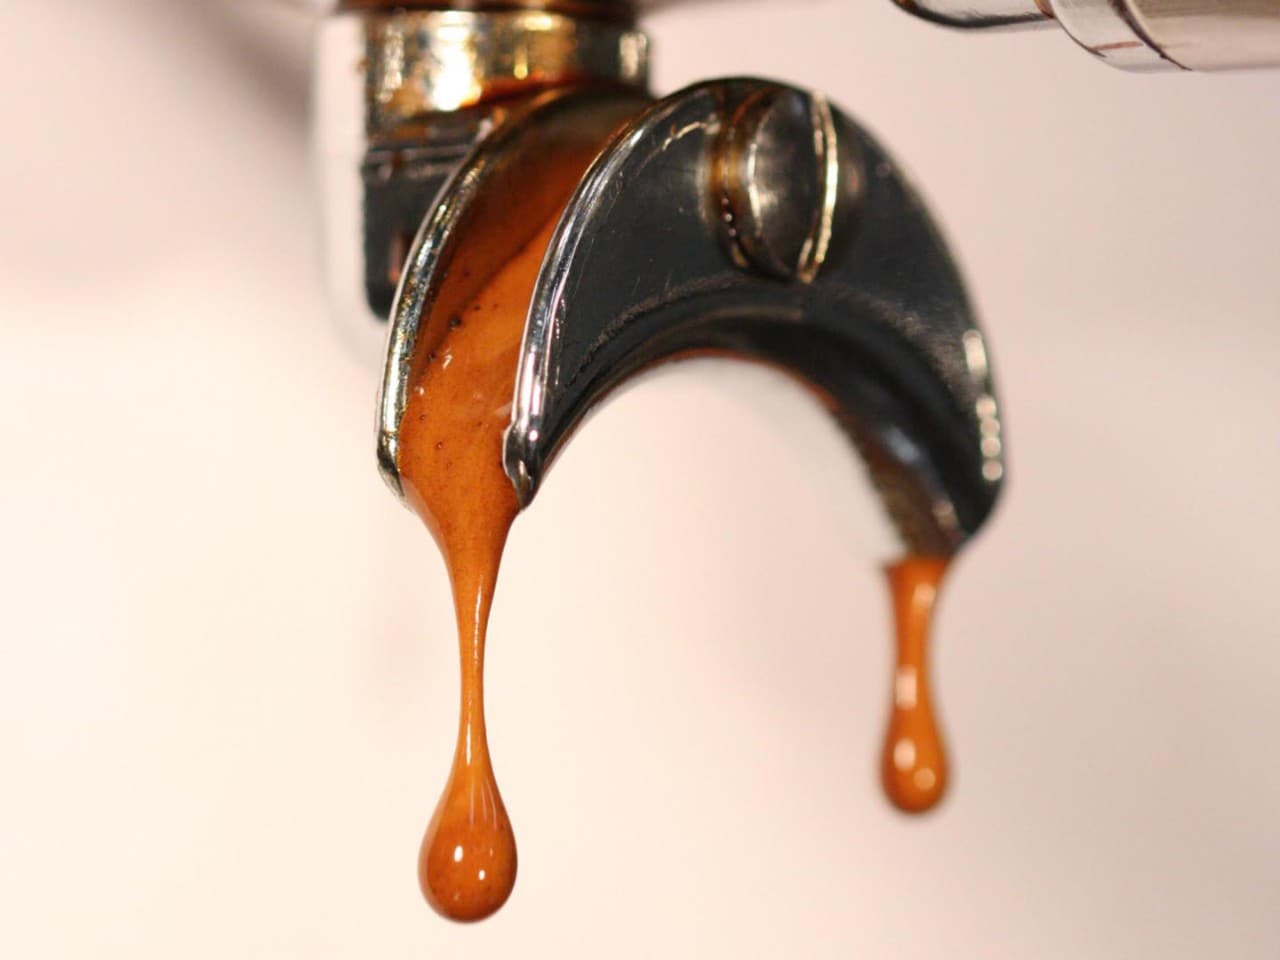 Close up coffee machine dripping coffee